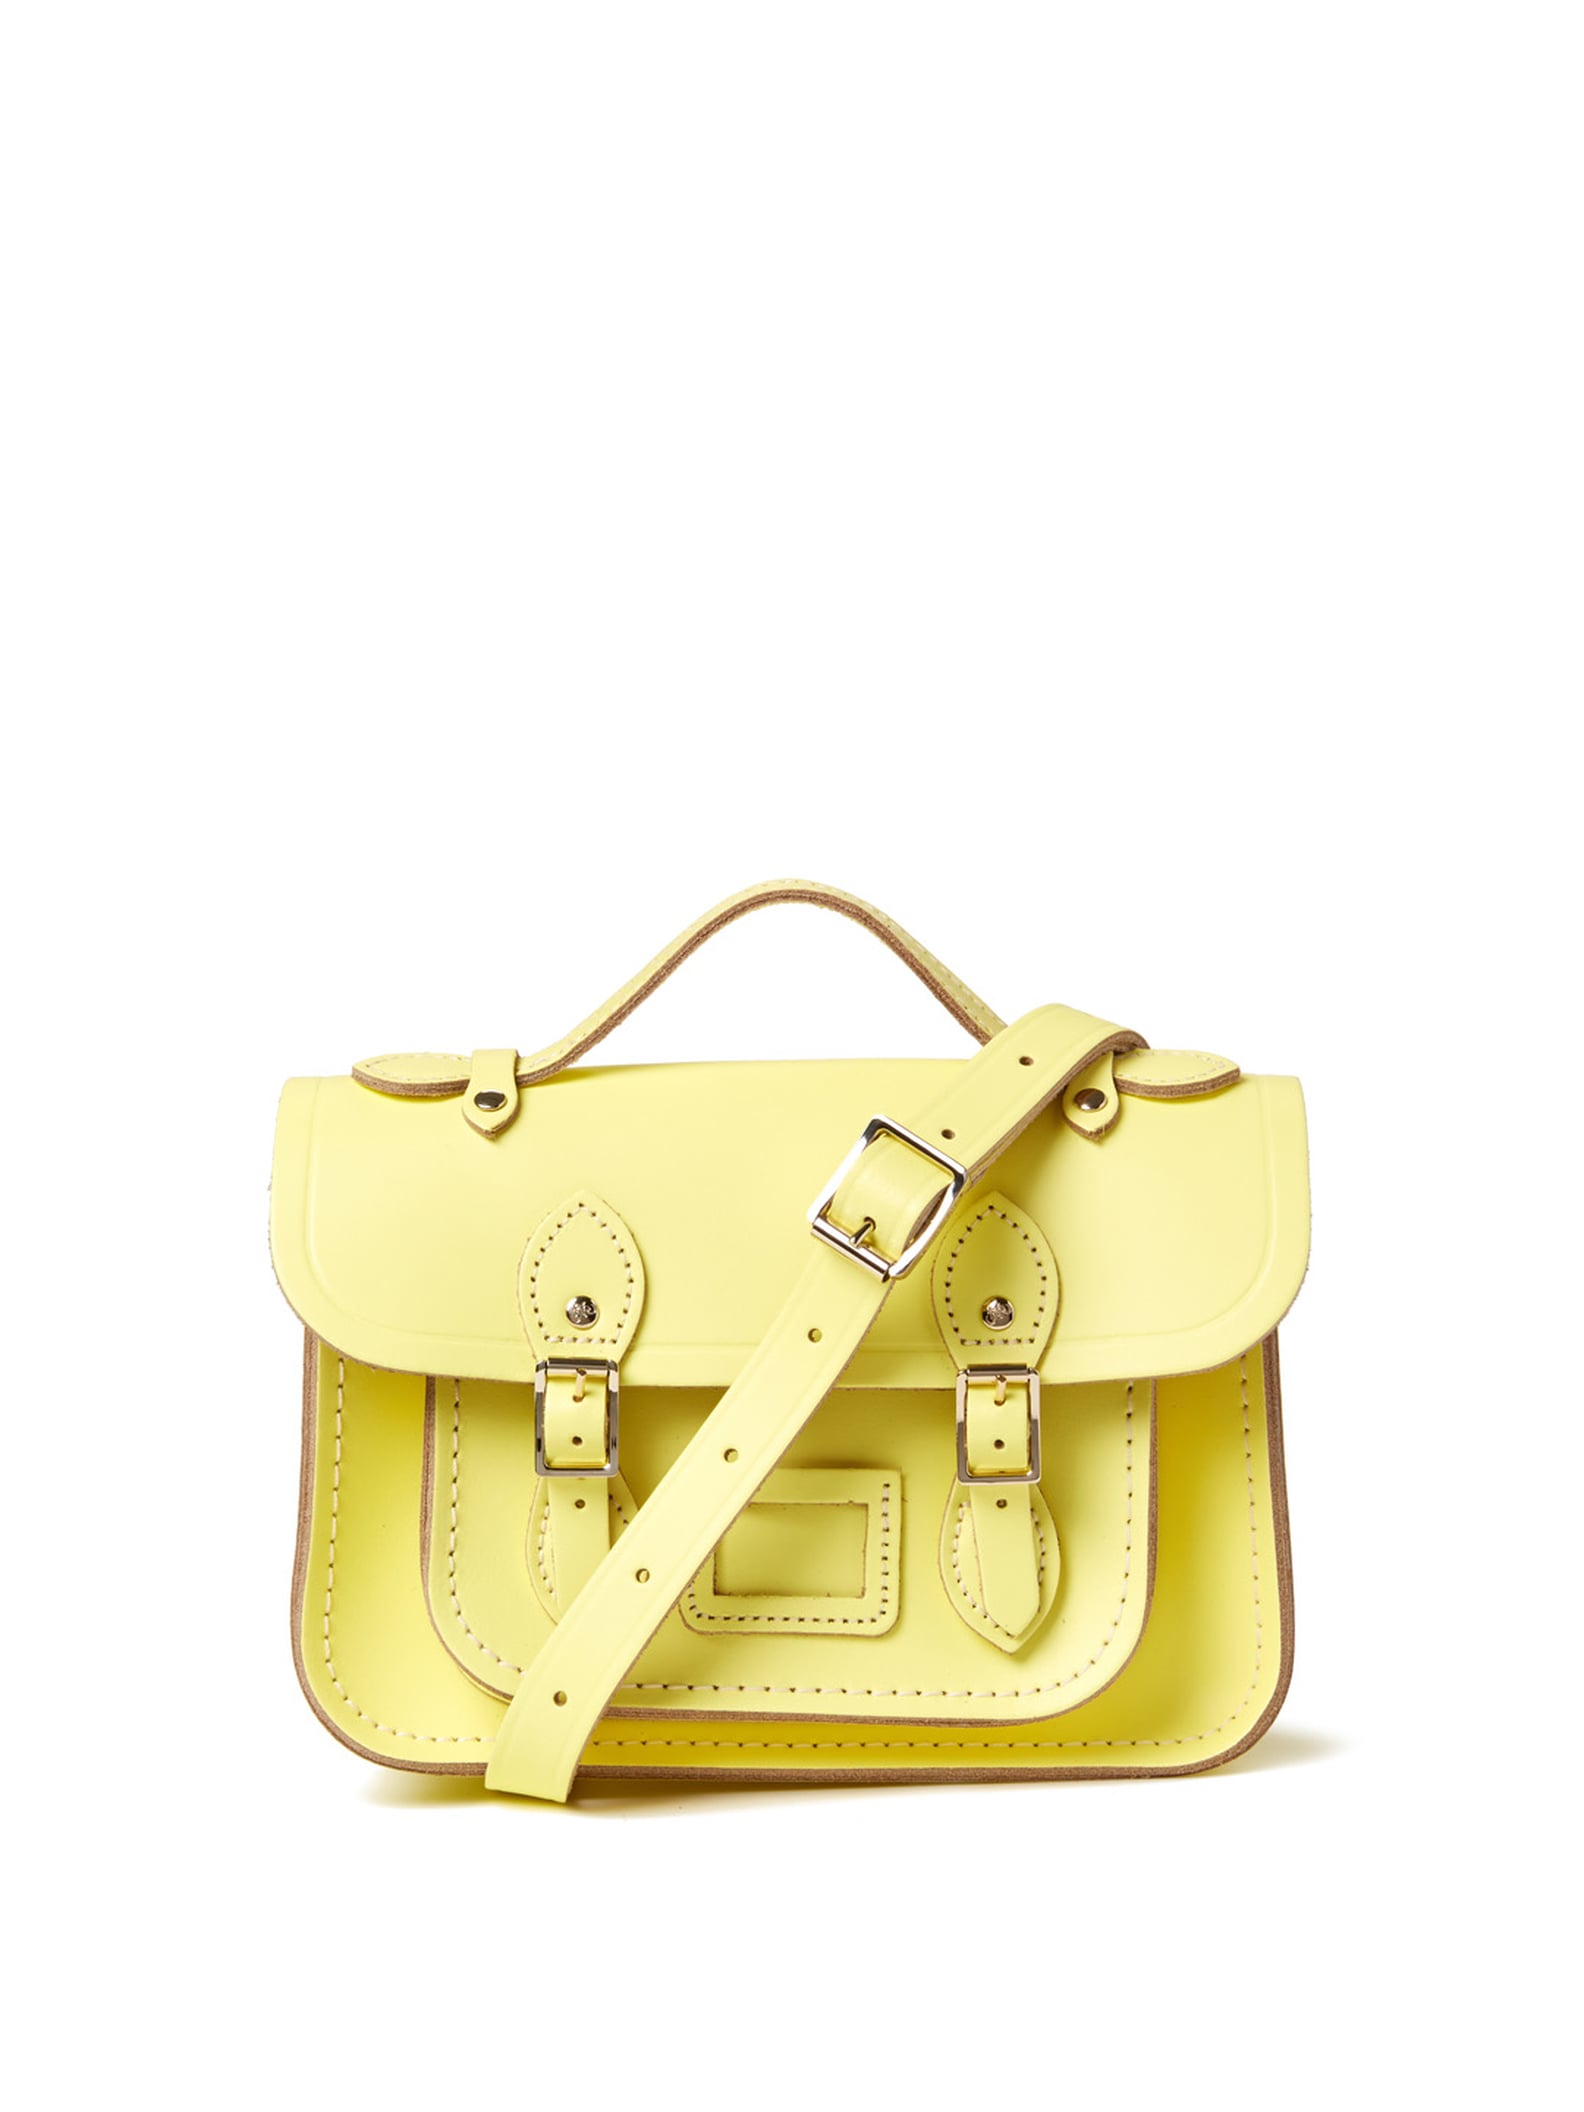 Cambridge Satchel Mini Bag Gilt Collection | POPSUGAR Fashion